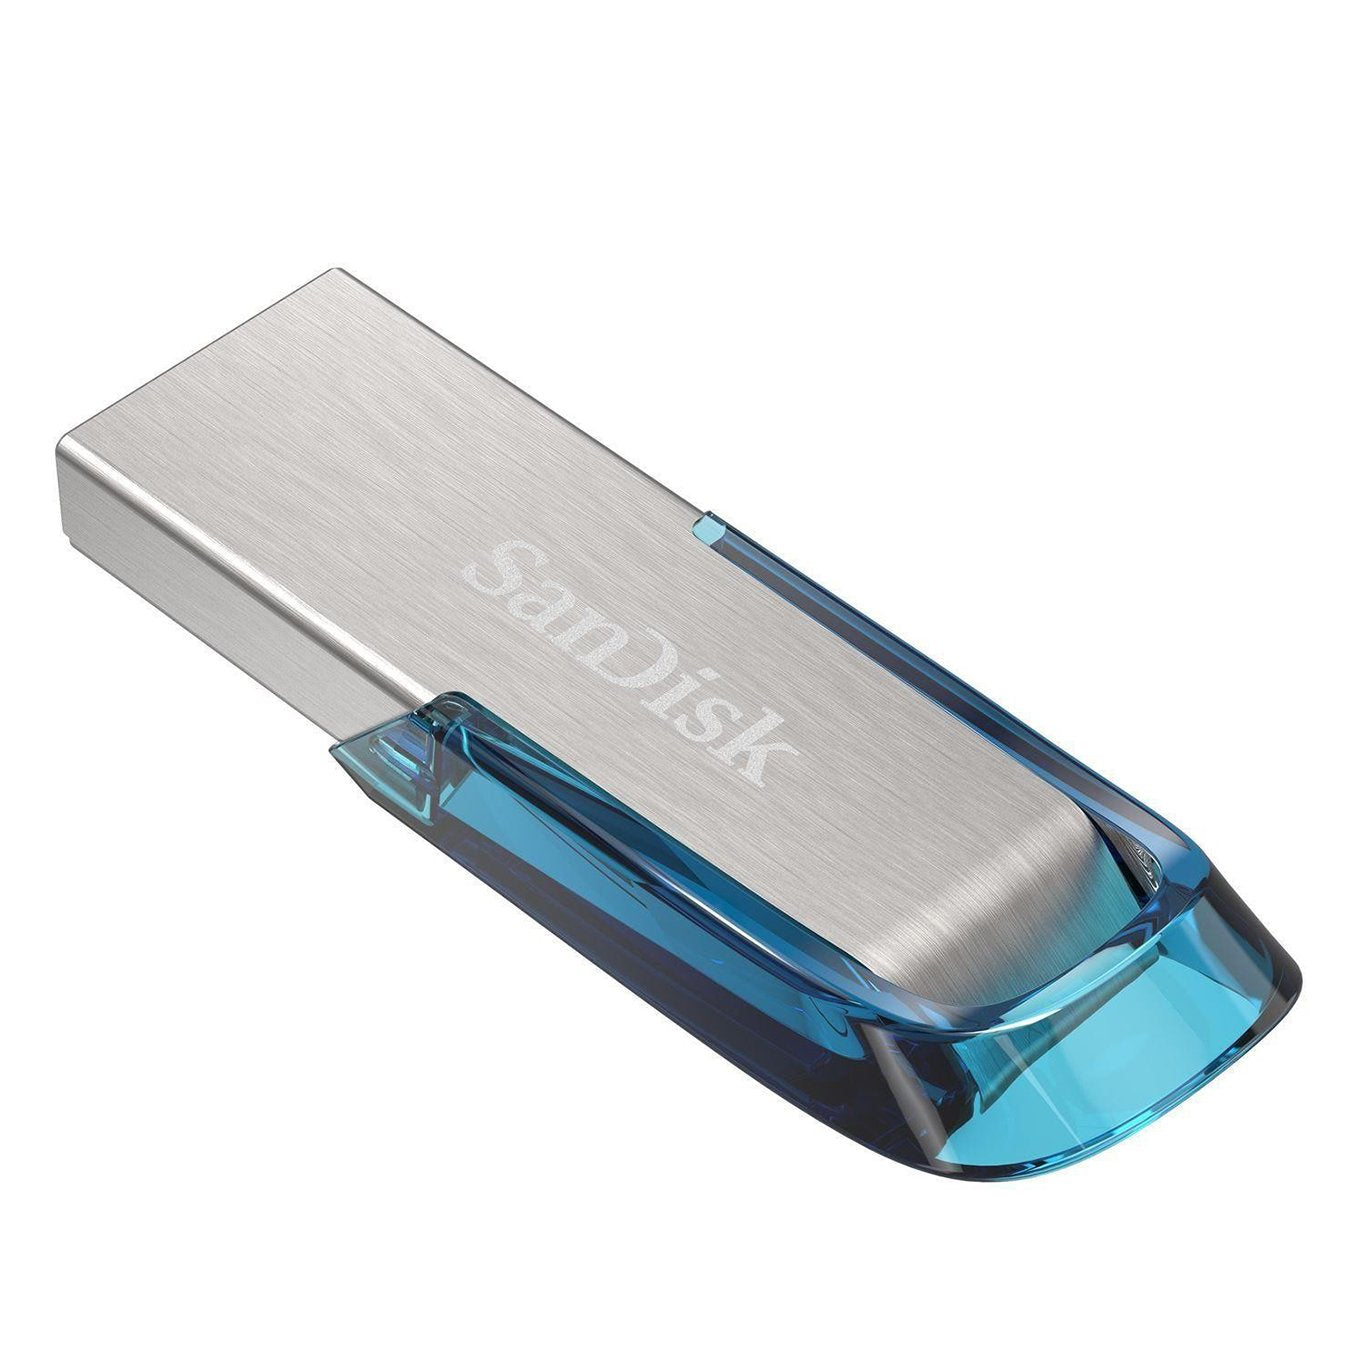 SanDisk Ultra Flair USB 3.0 Flash Drive - SanDisk Singapore Distributor Vector Magnetics Pte Ltd